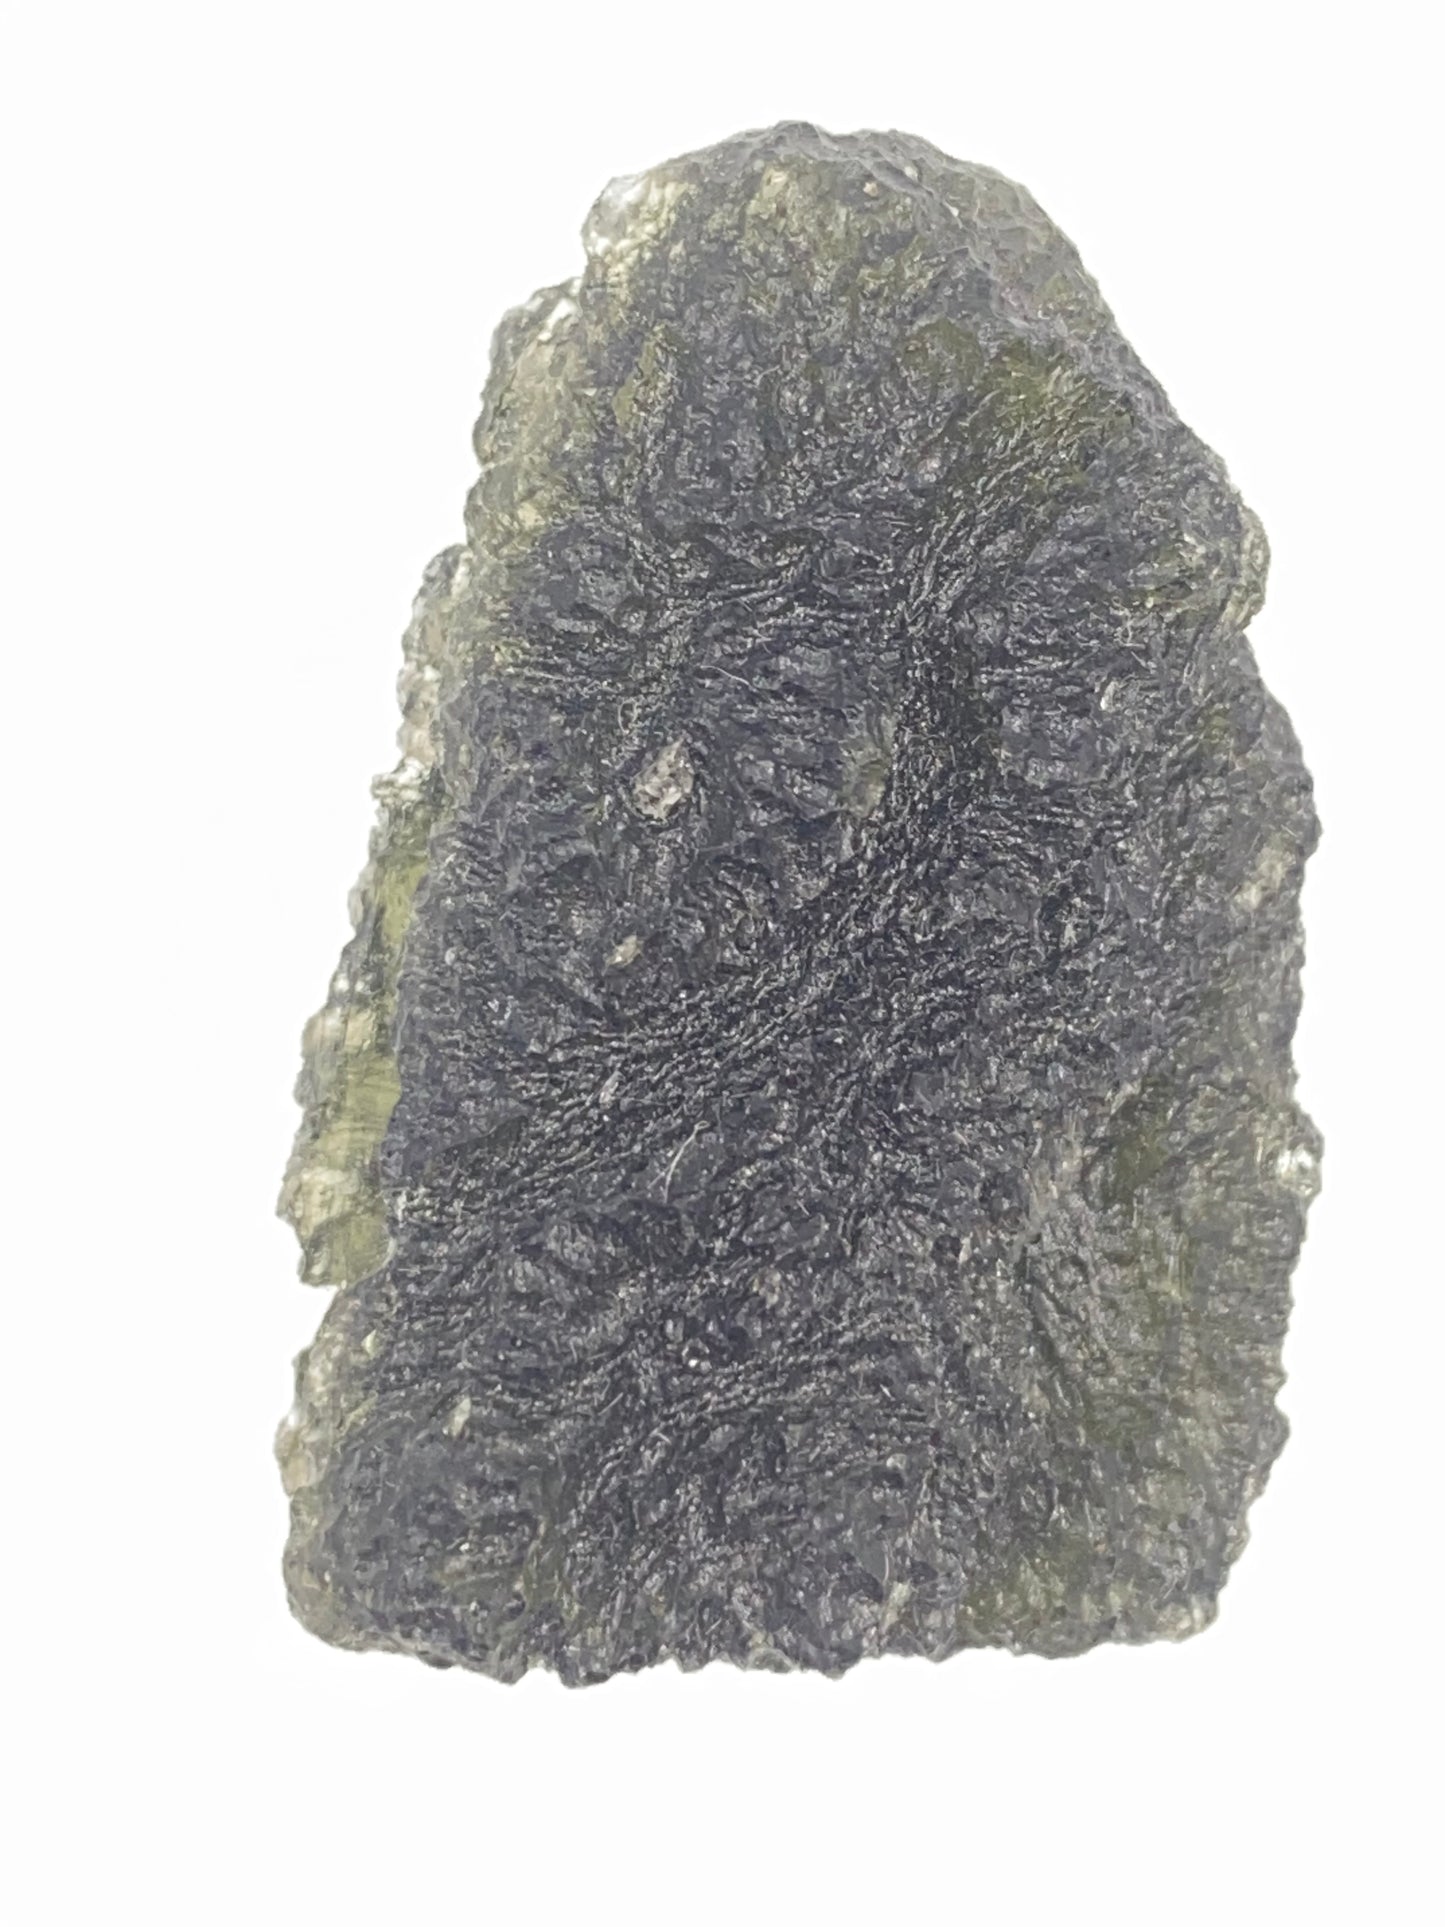 Rare Maly Chlum Moldavite Specimen with Air Bubble 10.2 grams